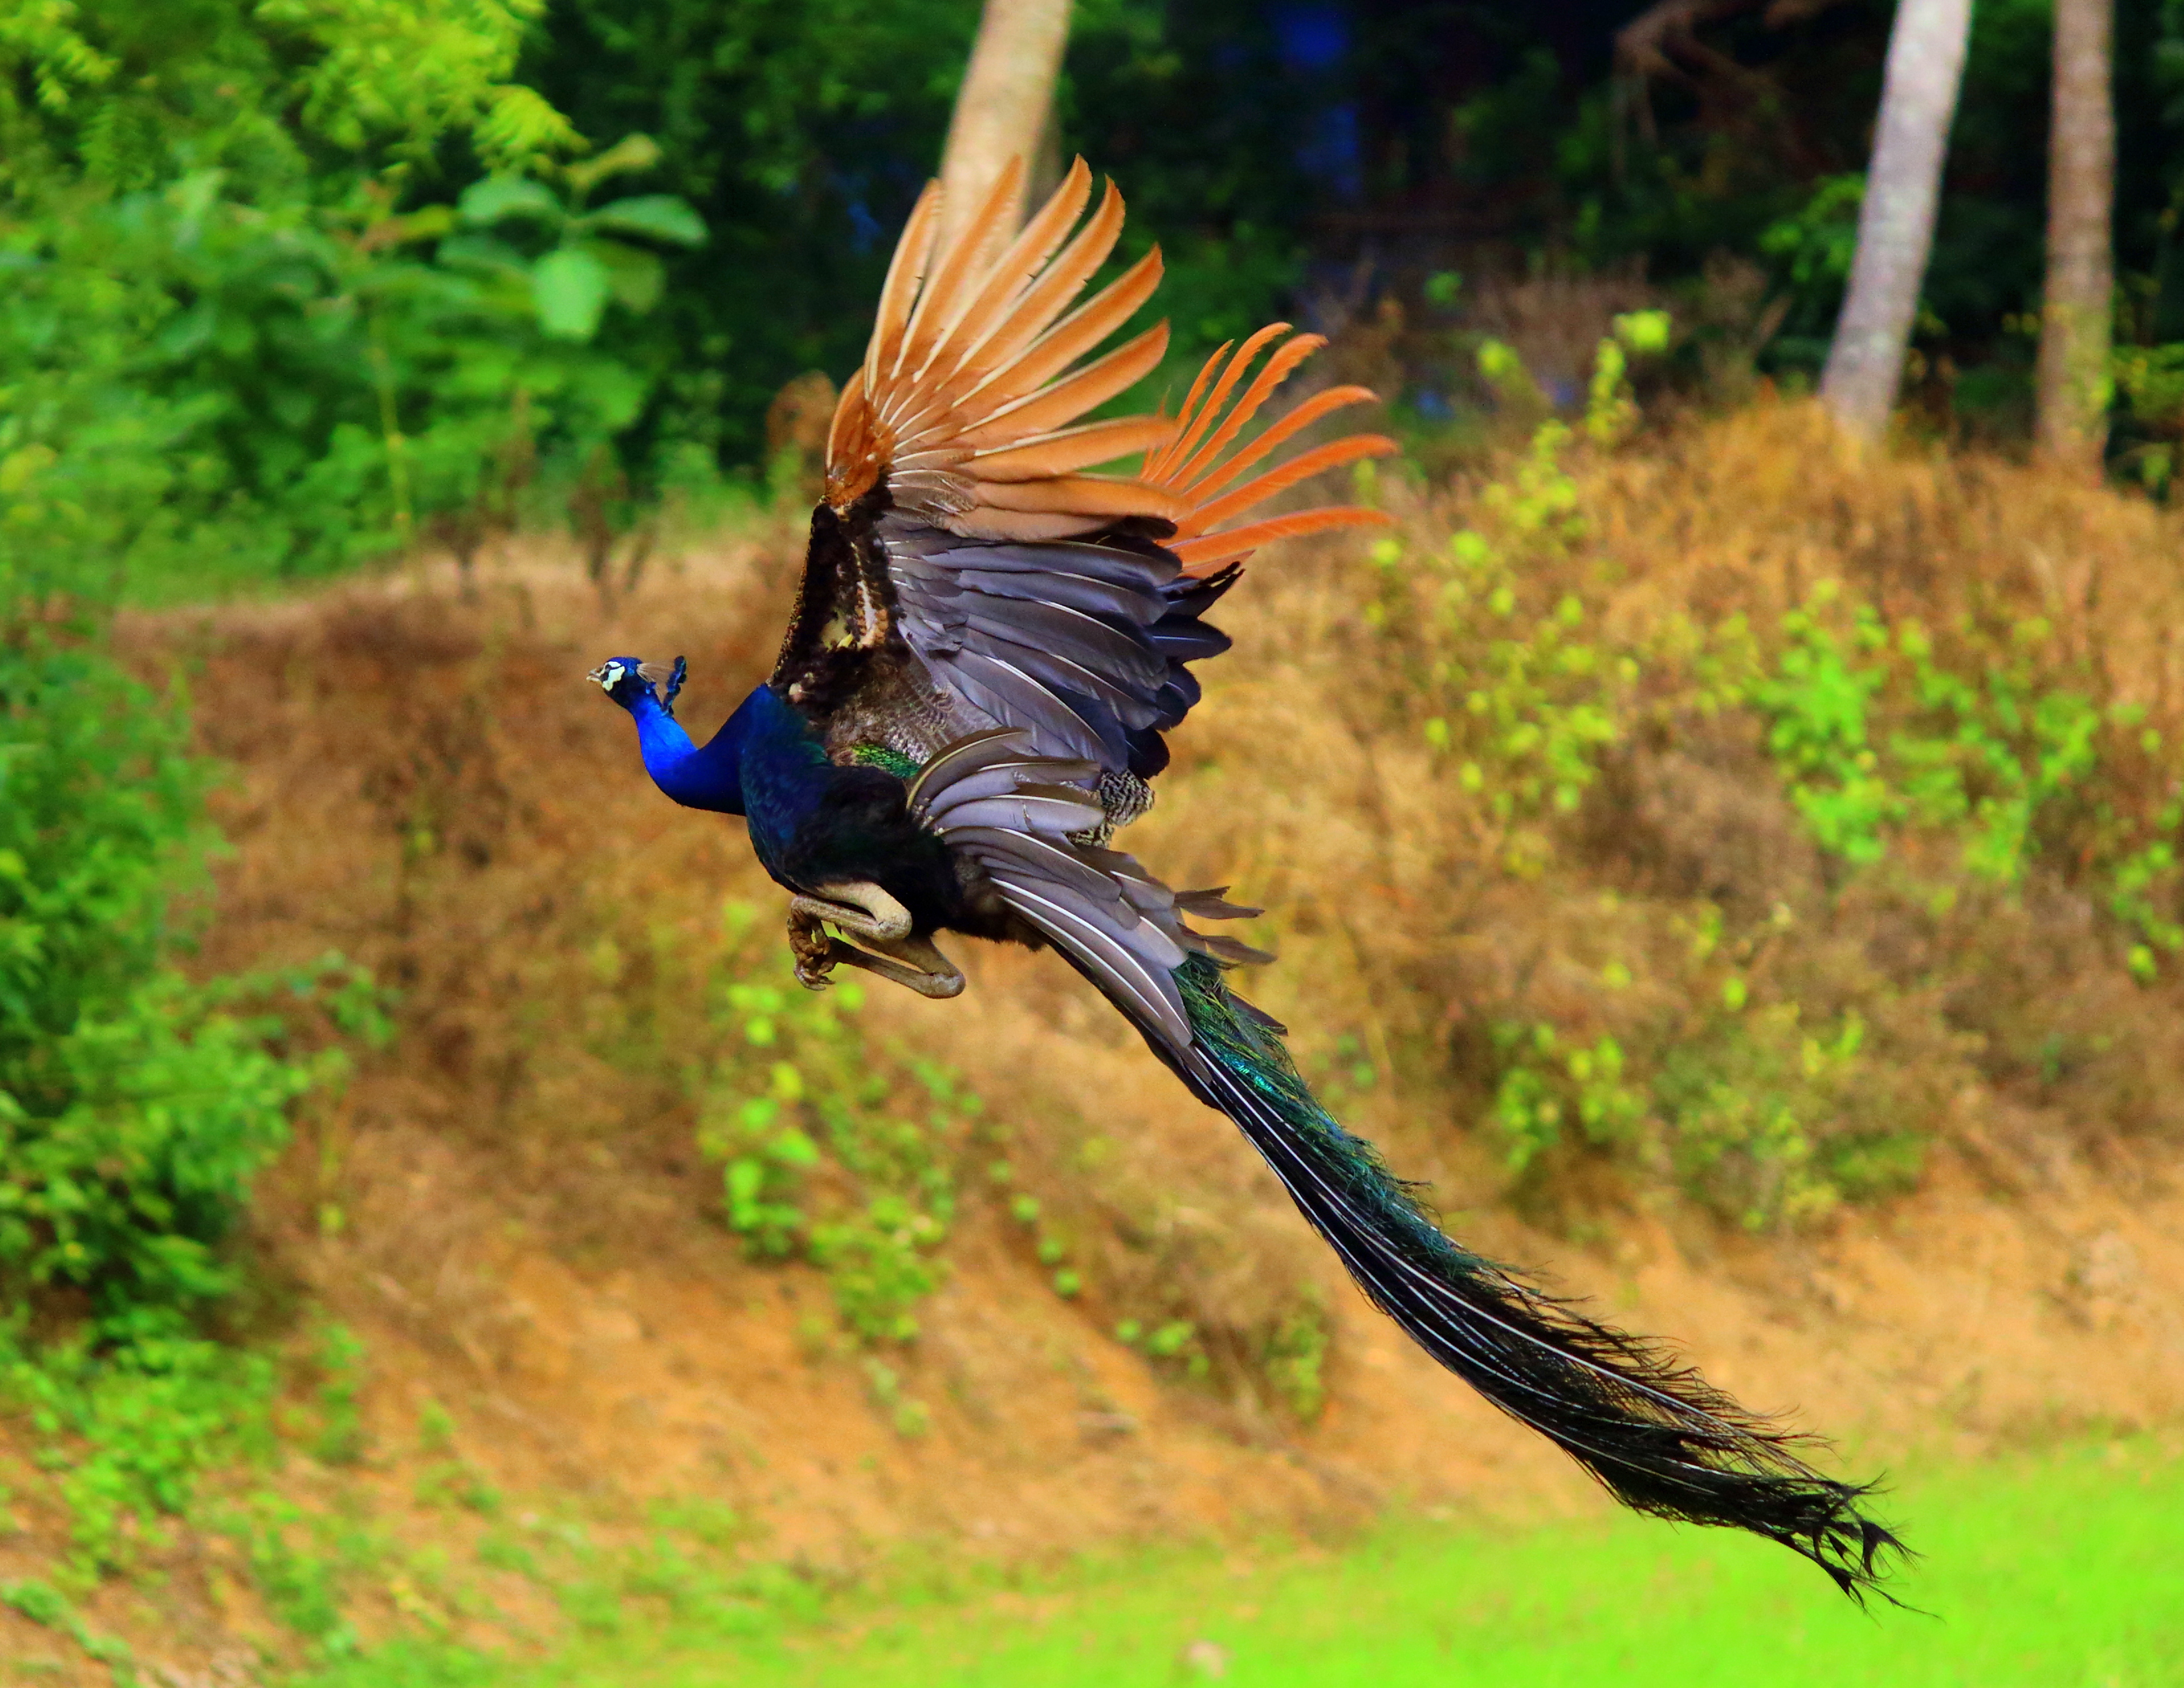 File:Flying Beauty Peacock.JPG - Wikimedia Commons